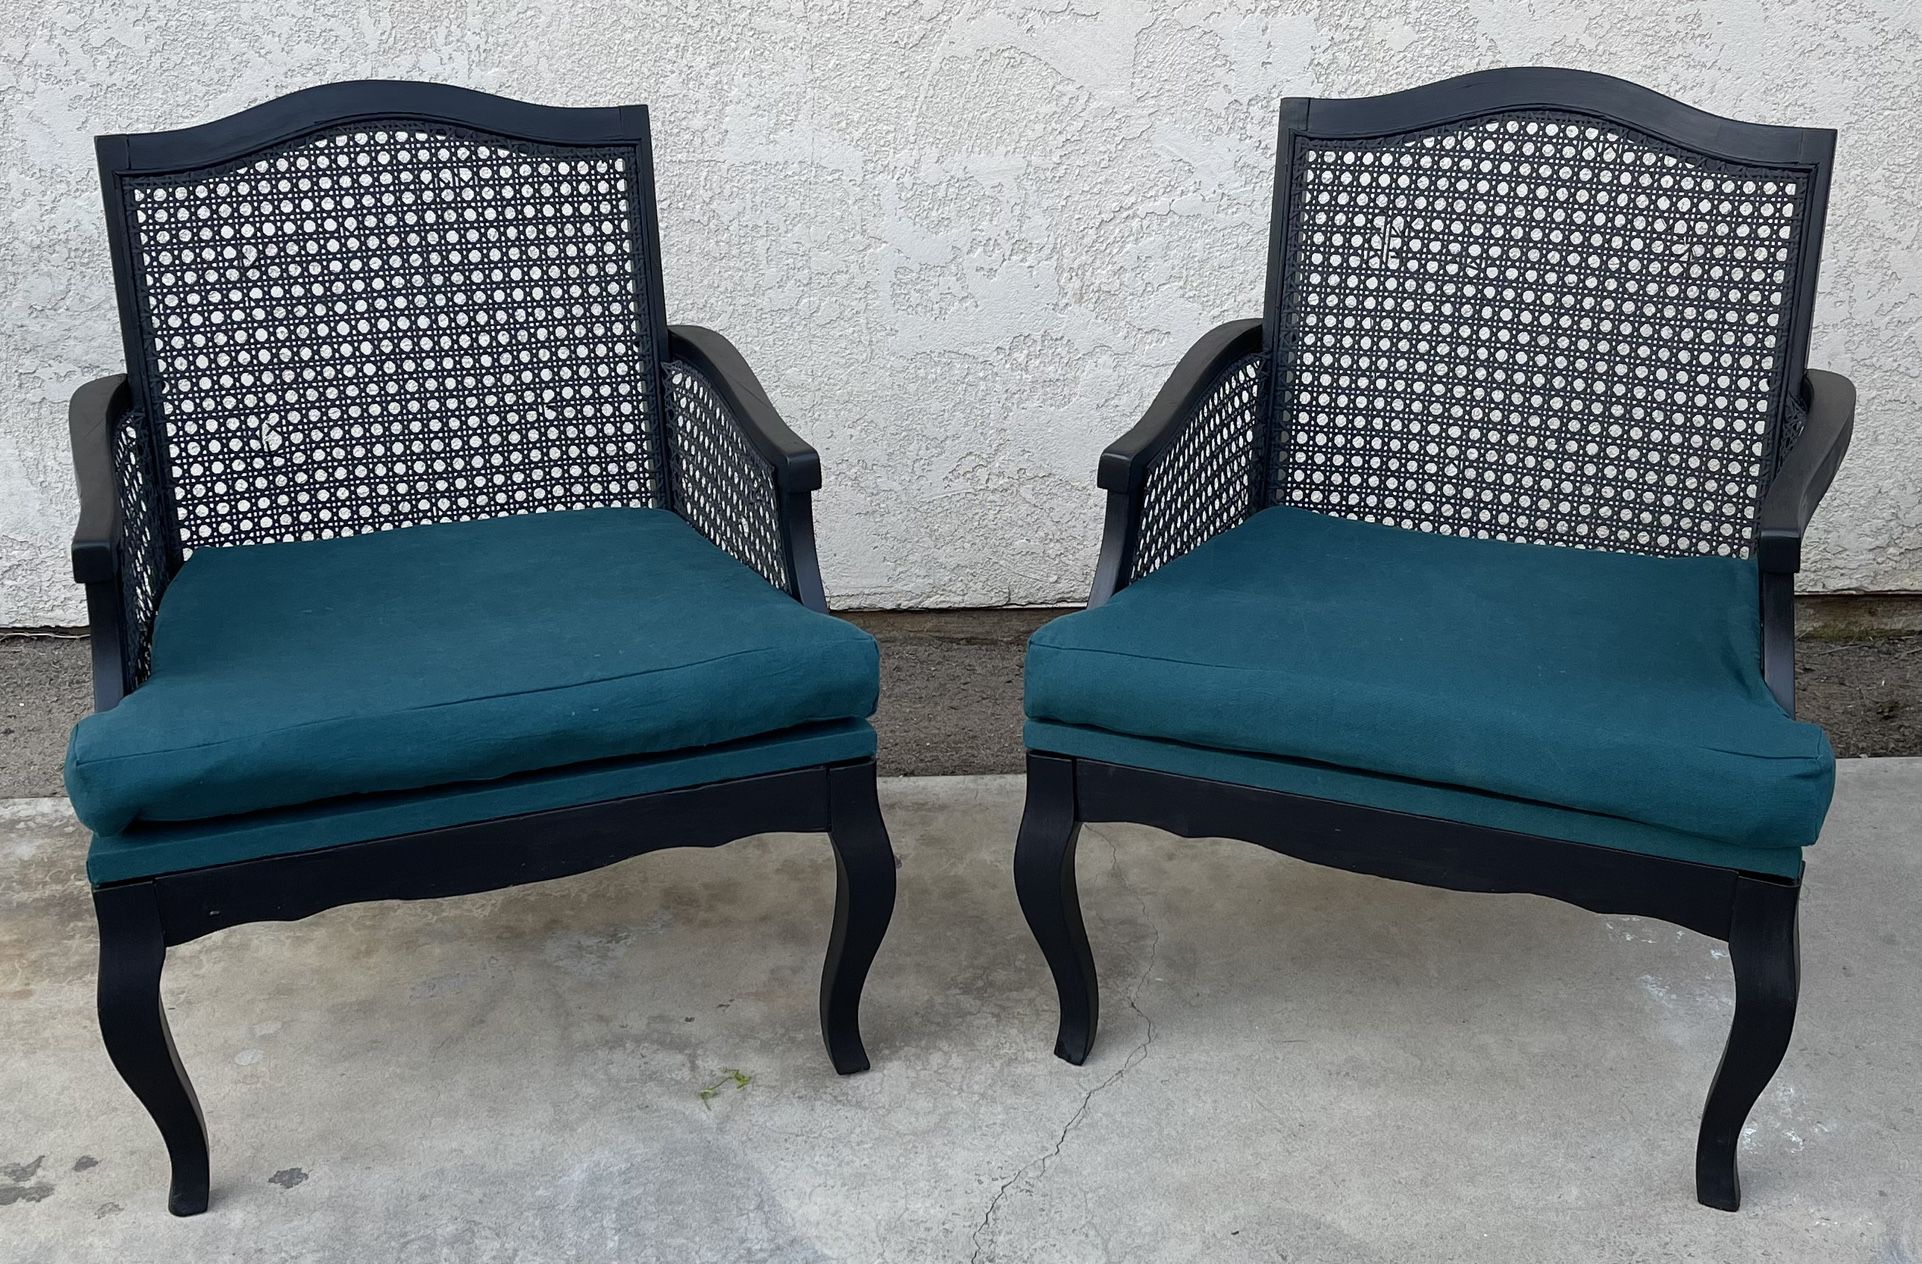 Pair Of Vintage Chairs